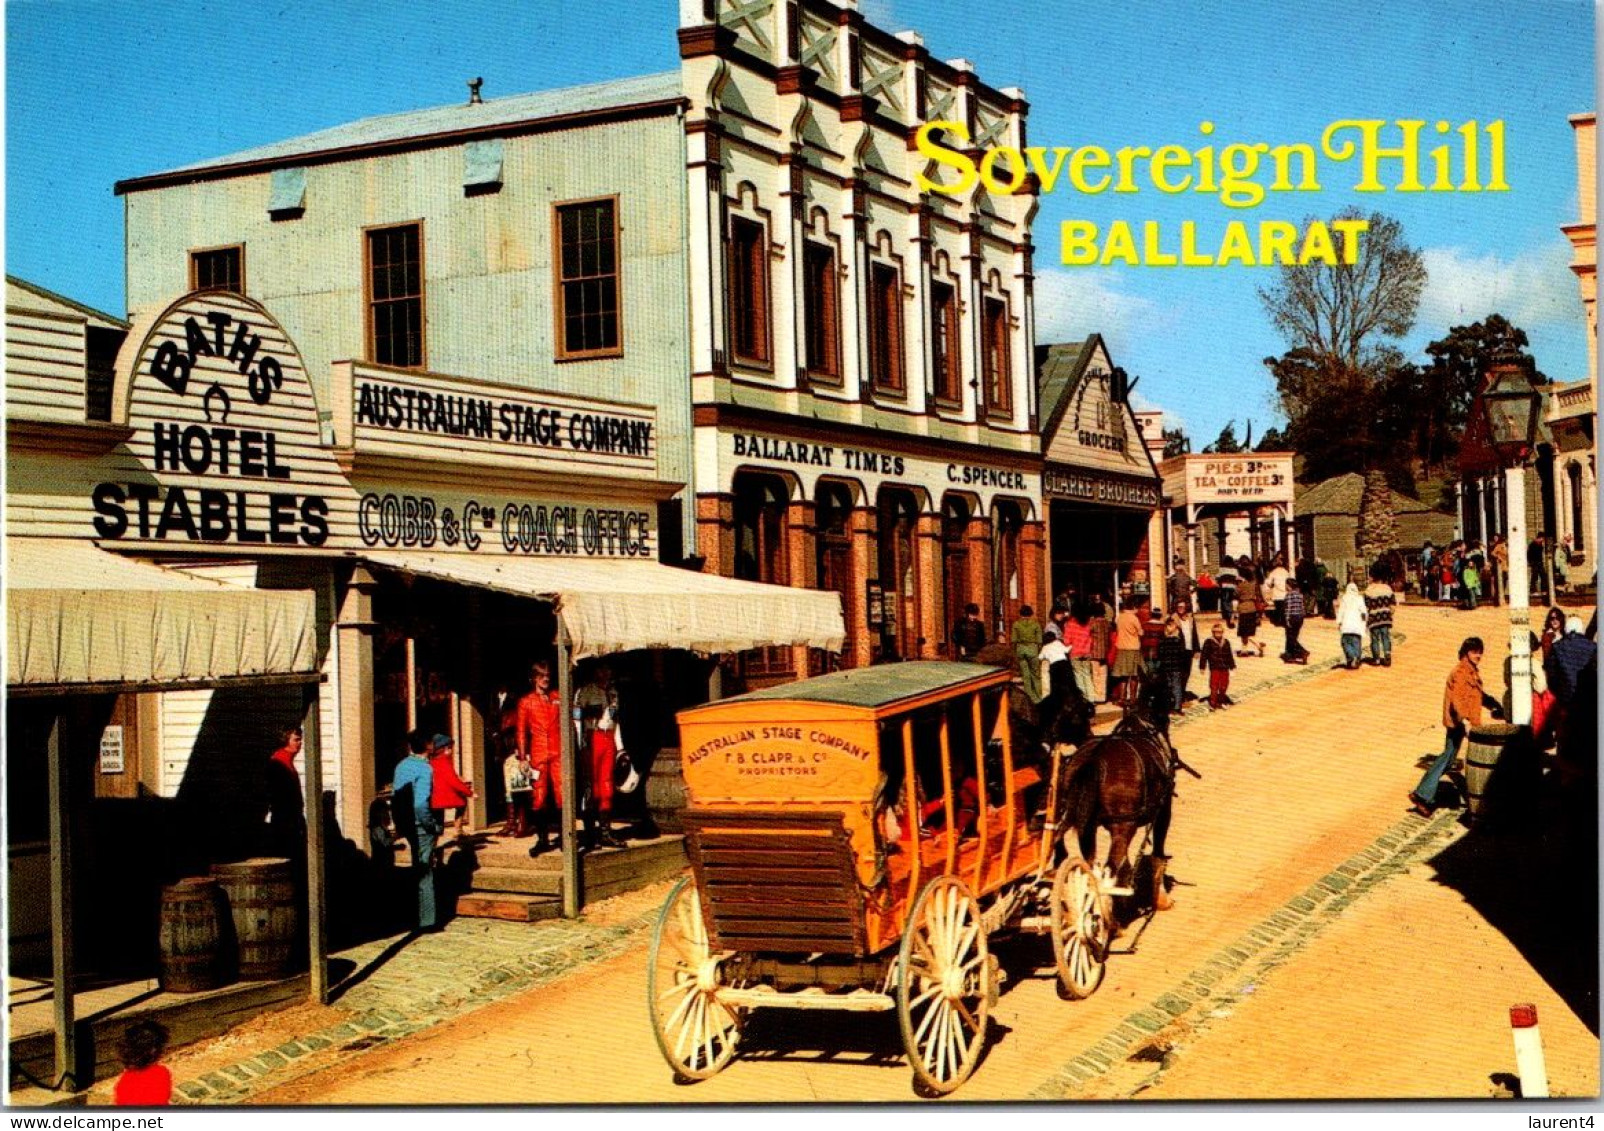 13-9-2023 (1 U 3) Australia - (2 Postcards) VIC - Ballarat - Sovereign Hill - Ballarat